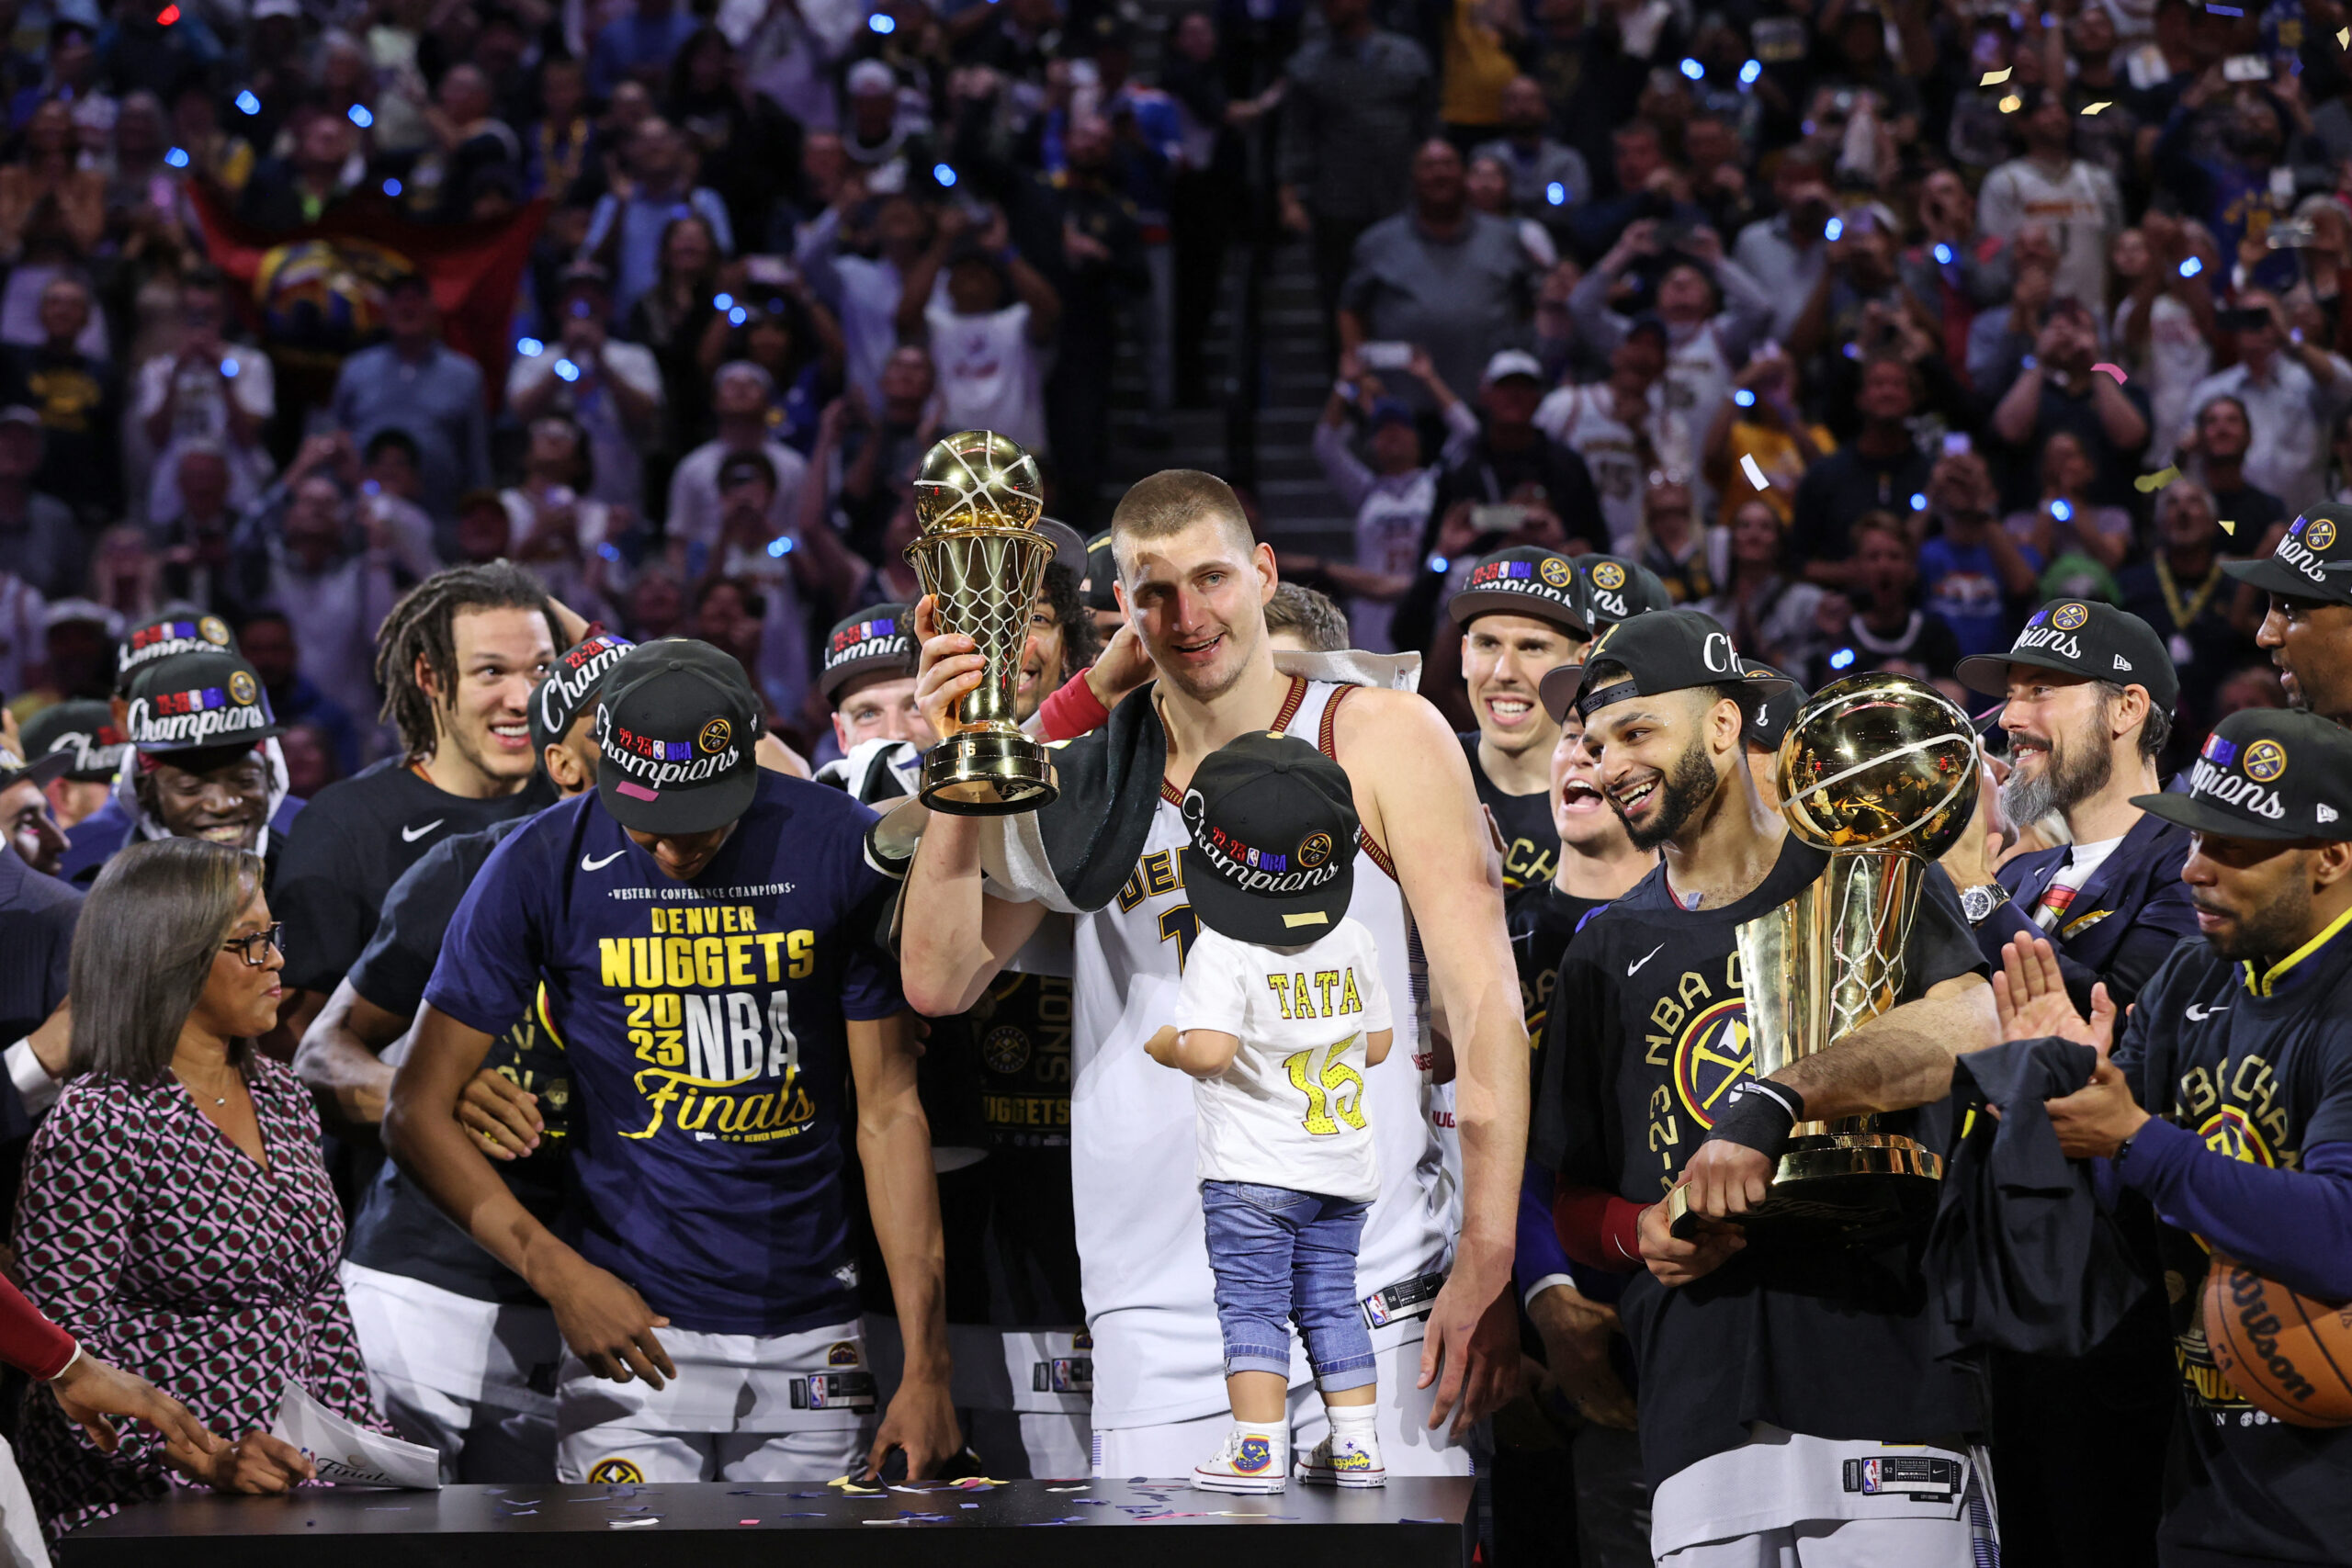 Nikola Jokic named 2023 NBA Finals MVP